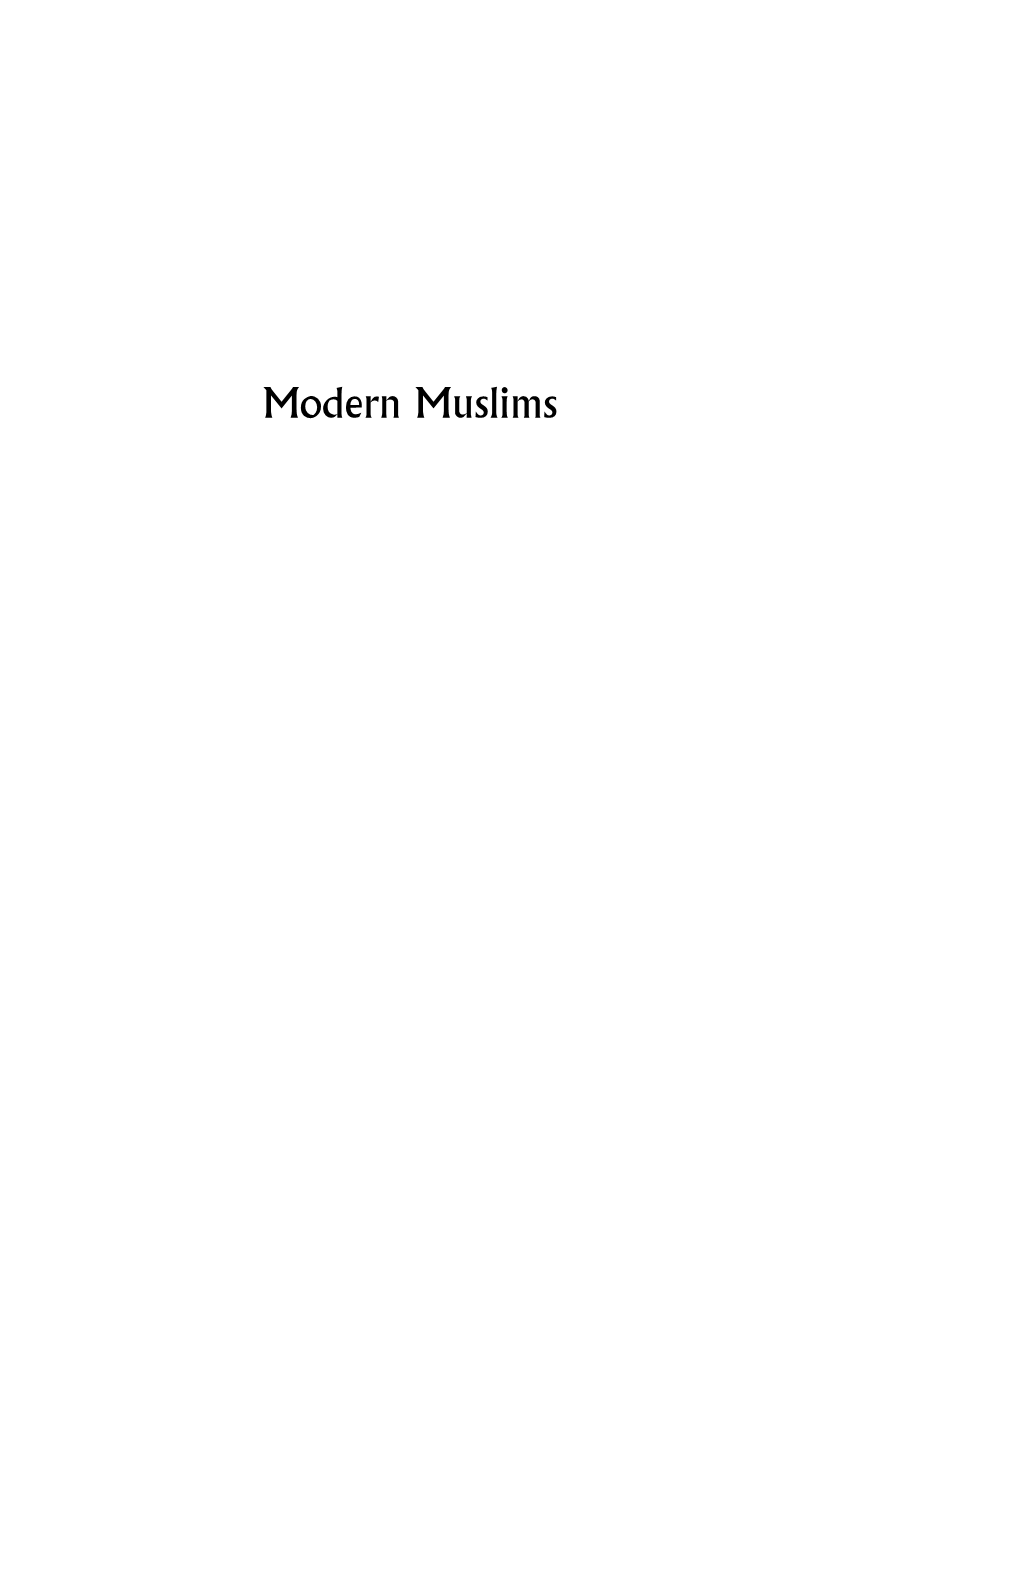 Modern Muslims Contents